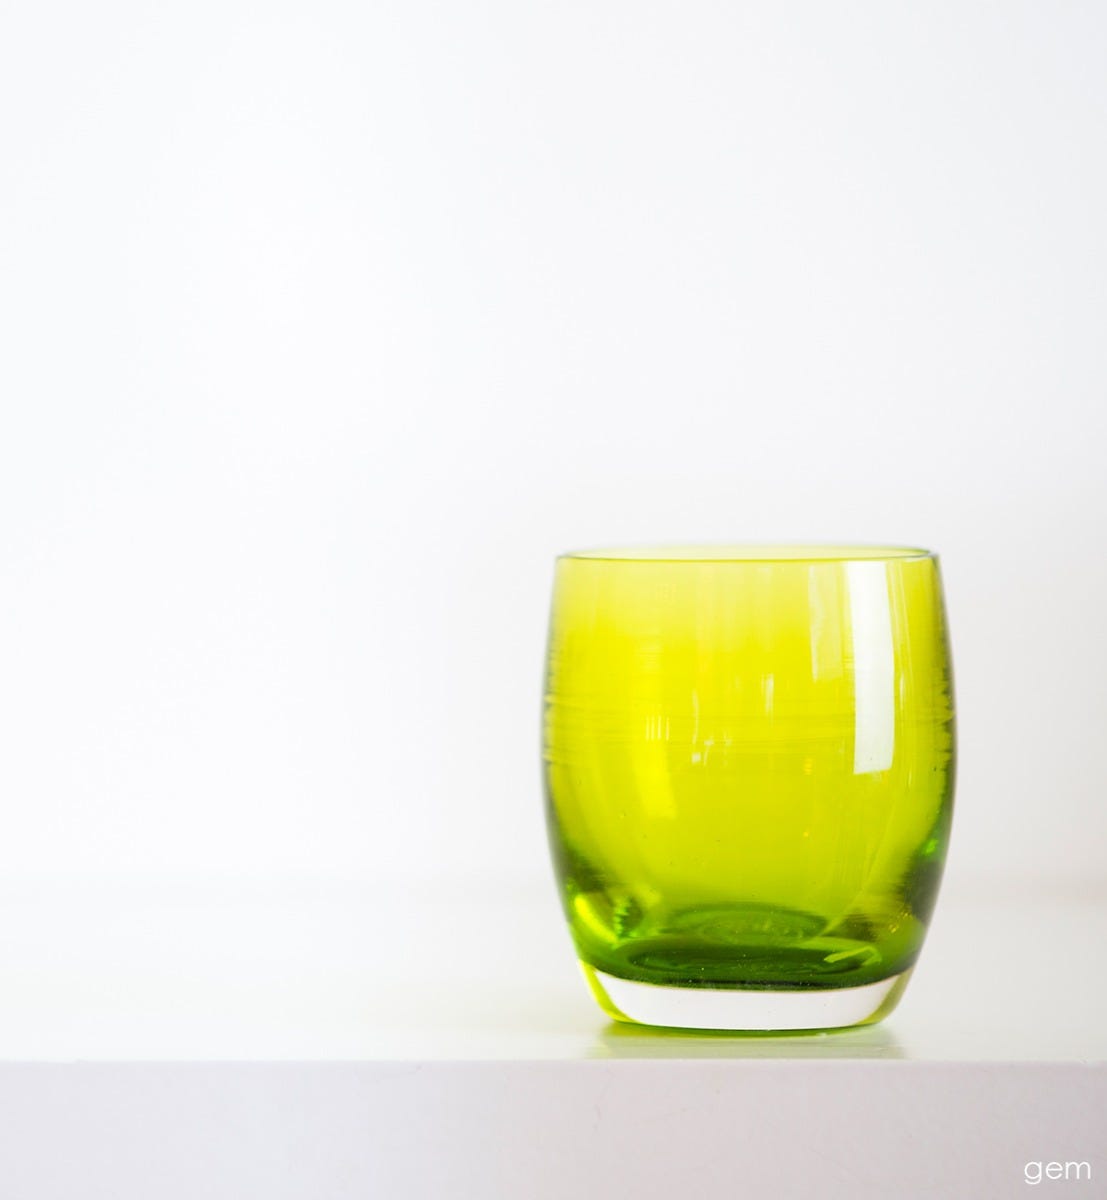 gem transparent green, hand-blown glass votive candle holder.